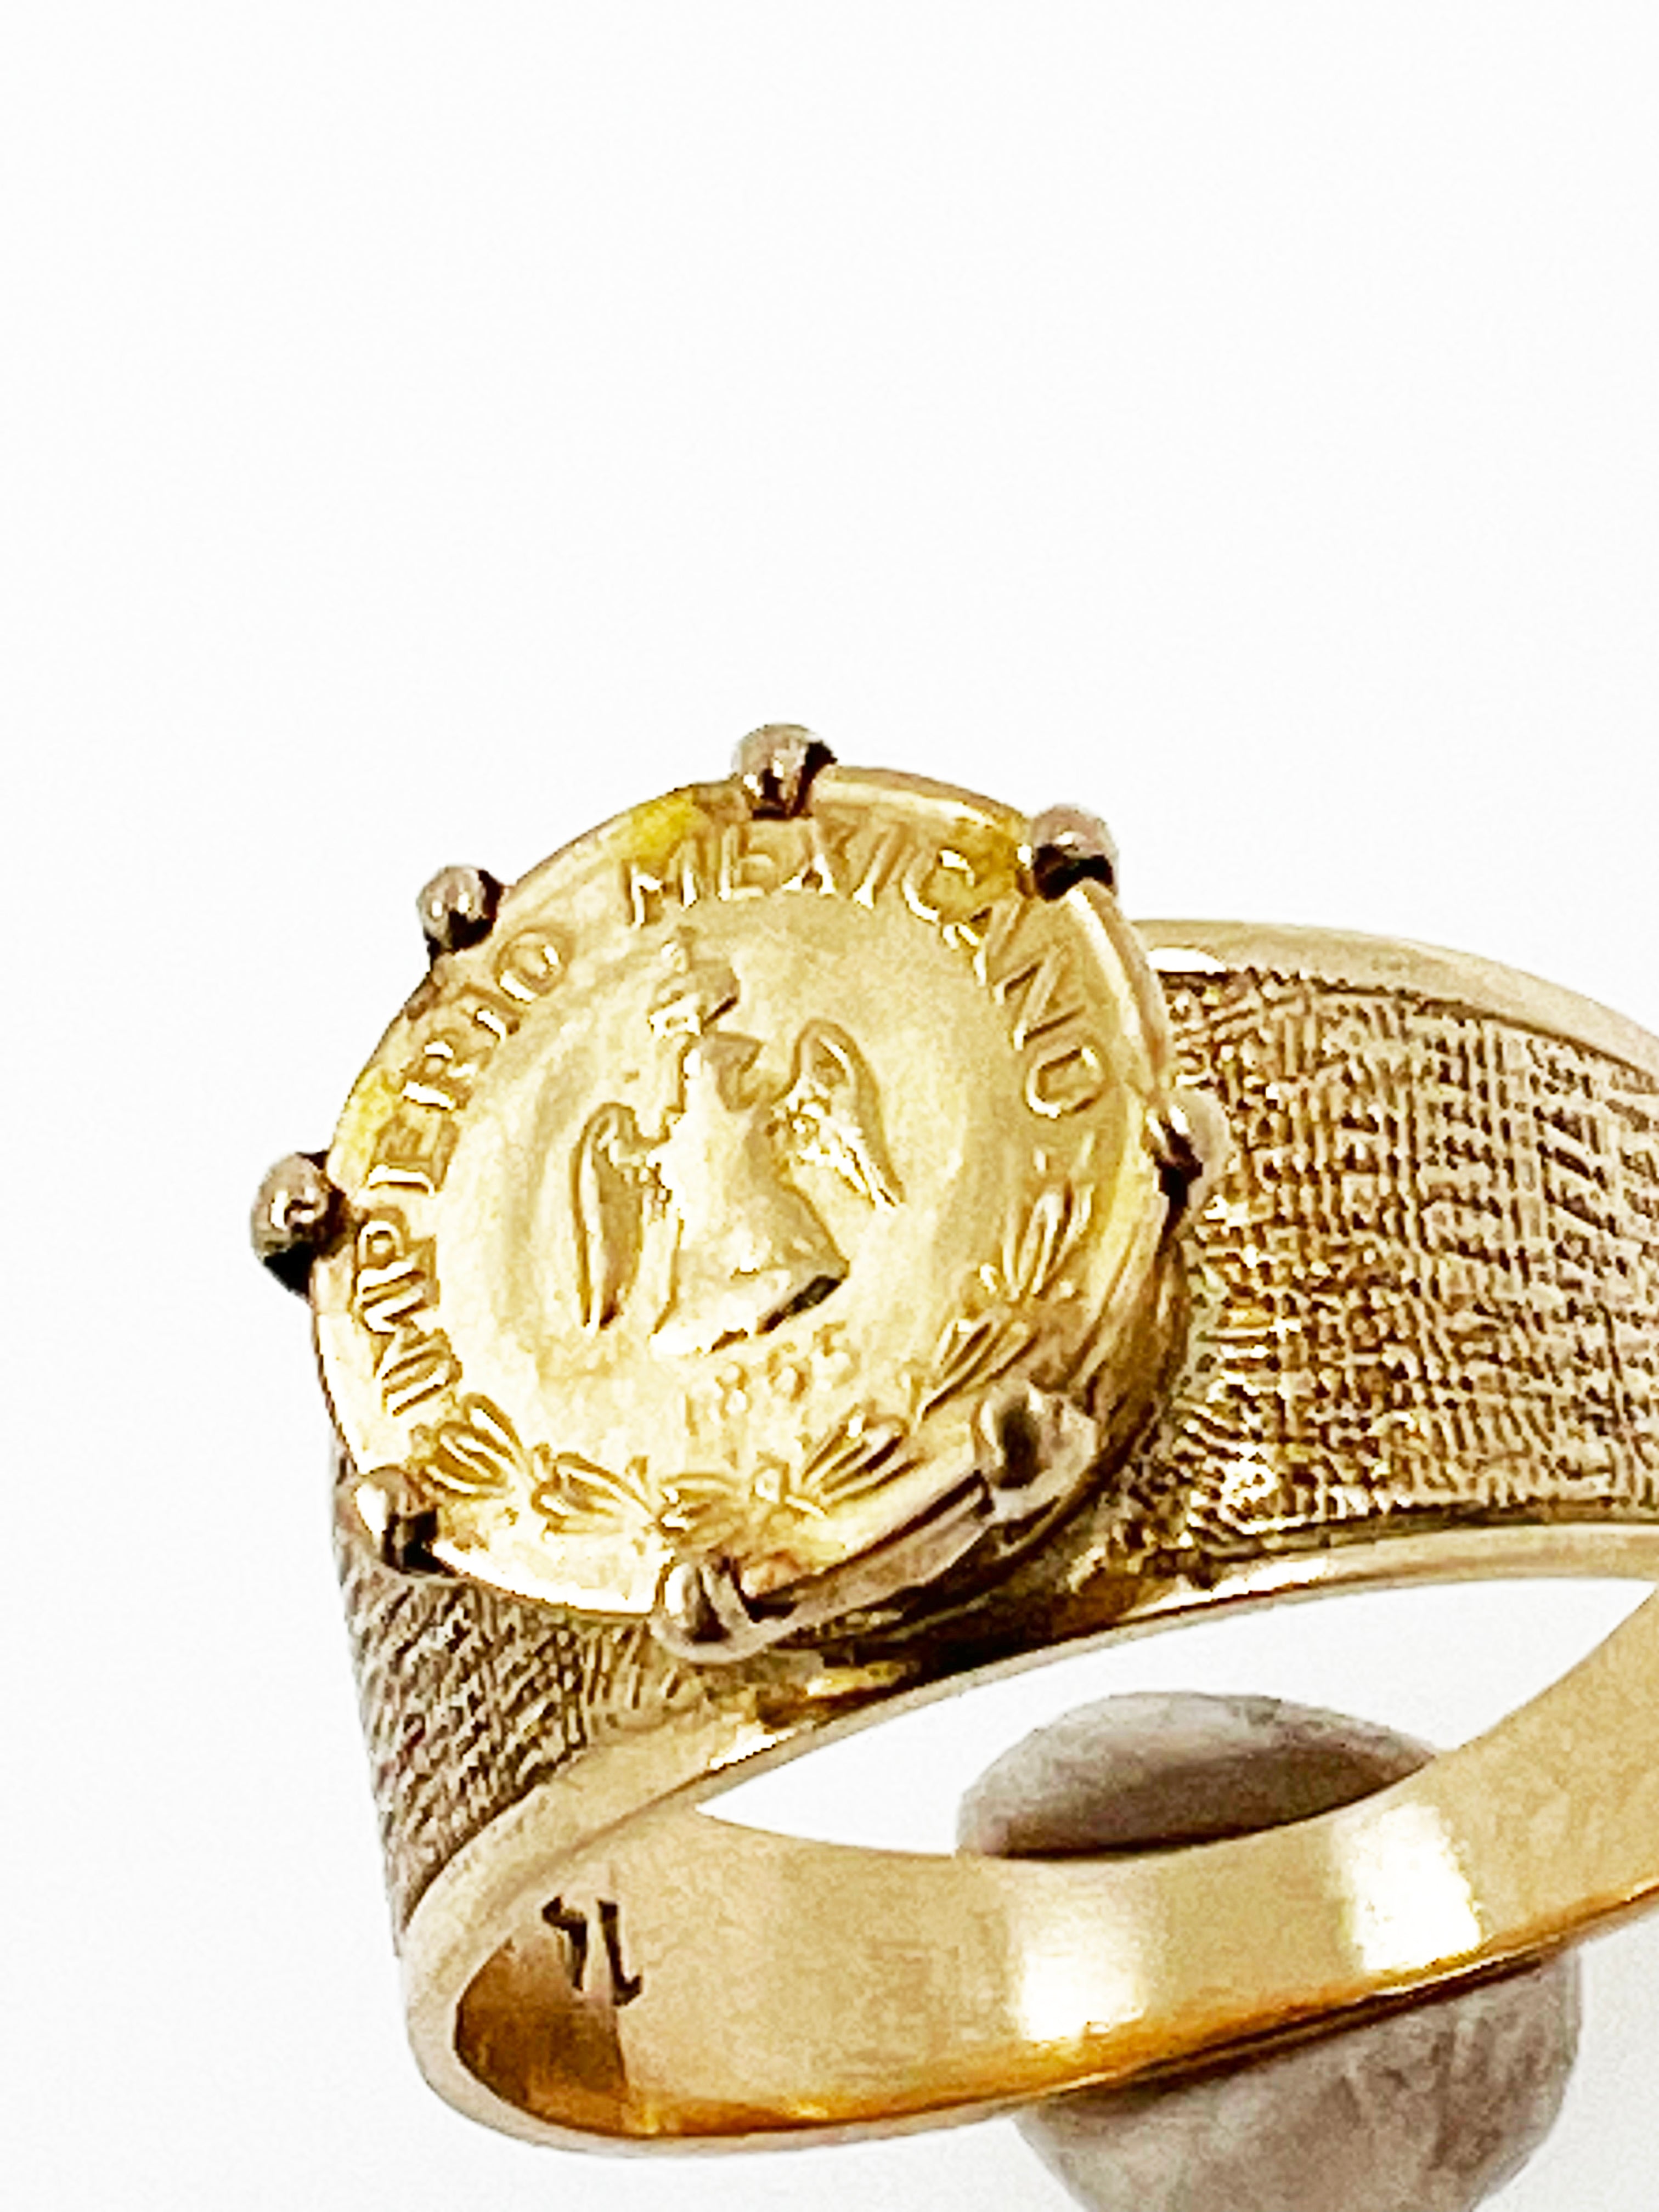 GOLD & VINTAGE SILVER LABRADORITE COIN RING - Tat2 Designs